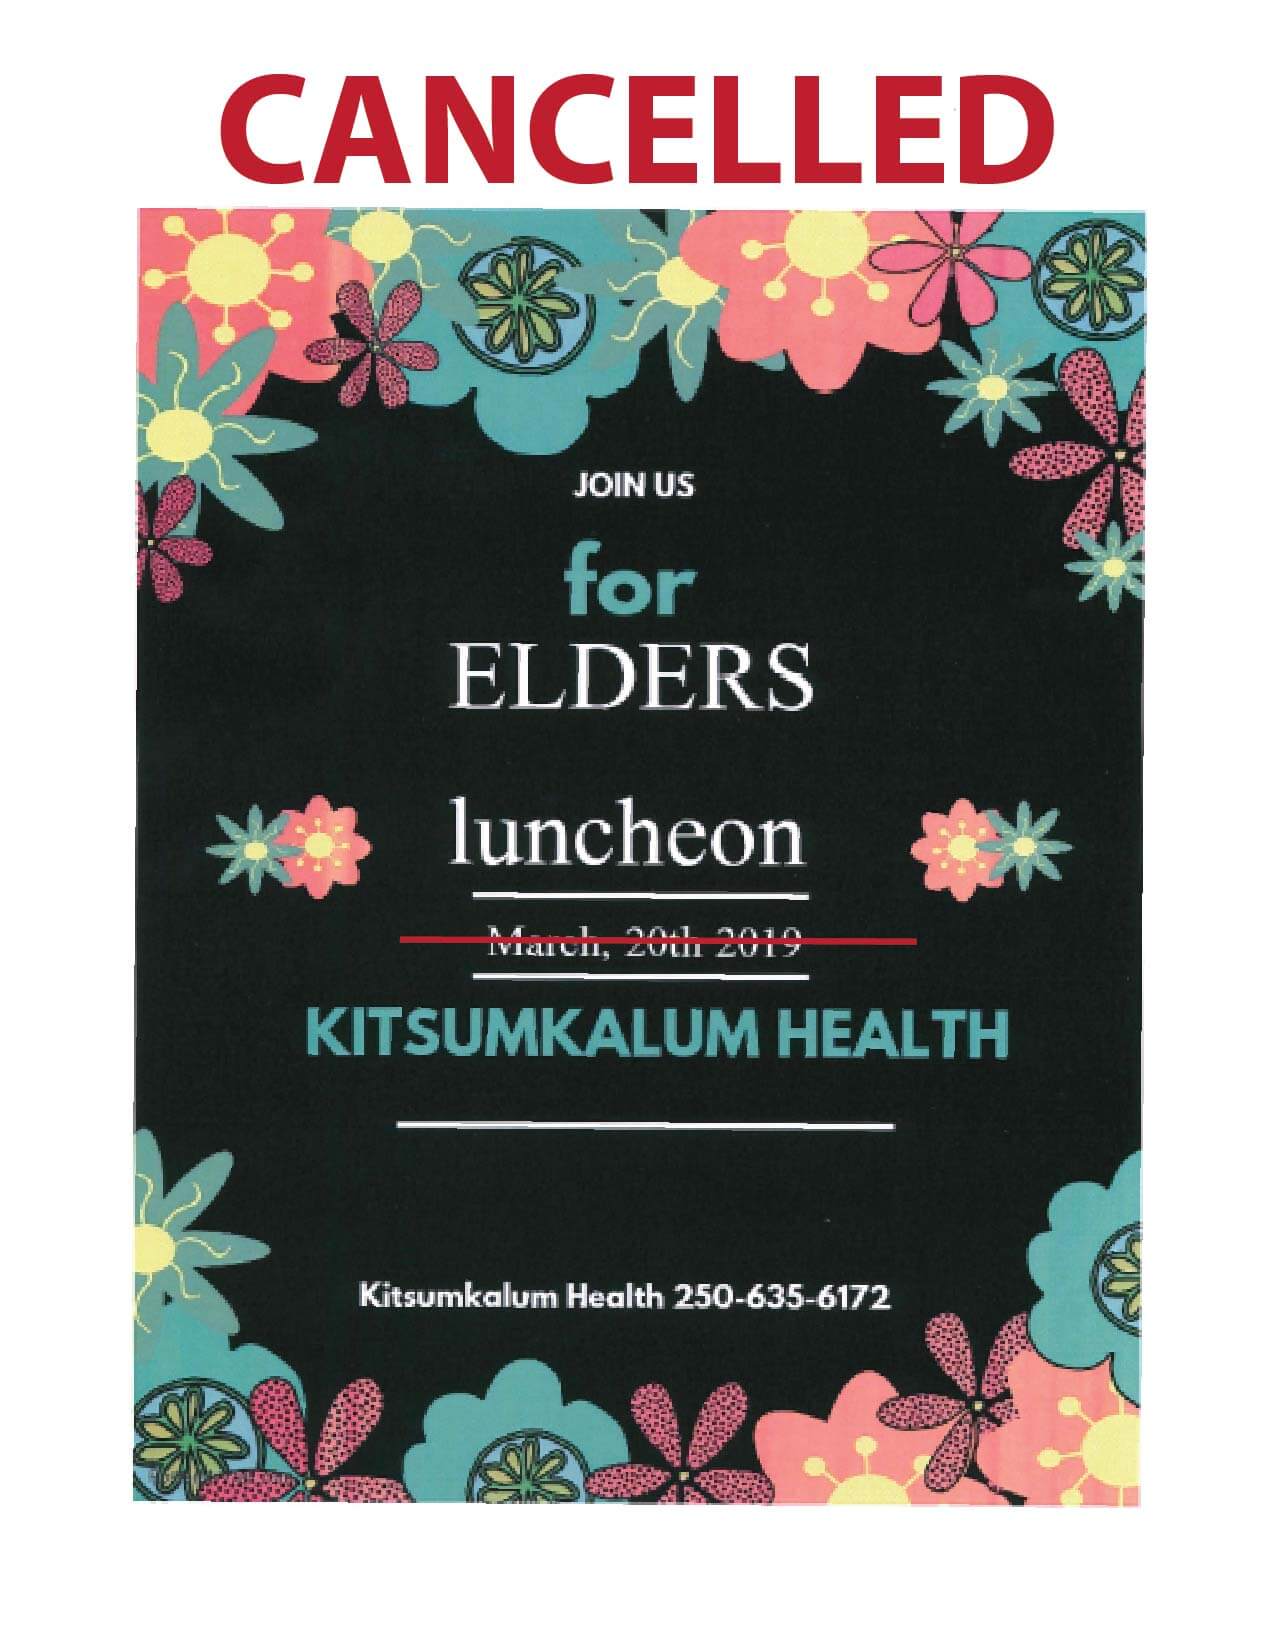 Elders Luncheon Cancelled